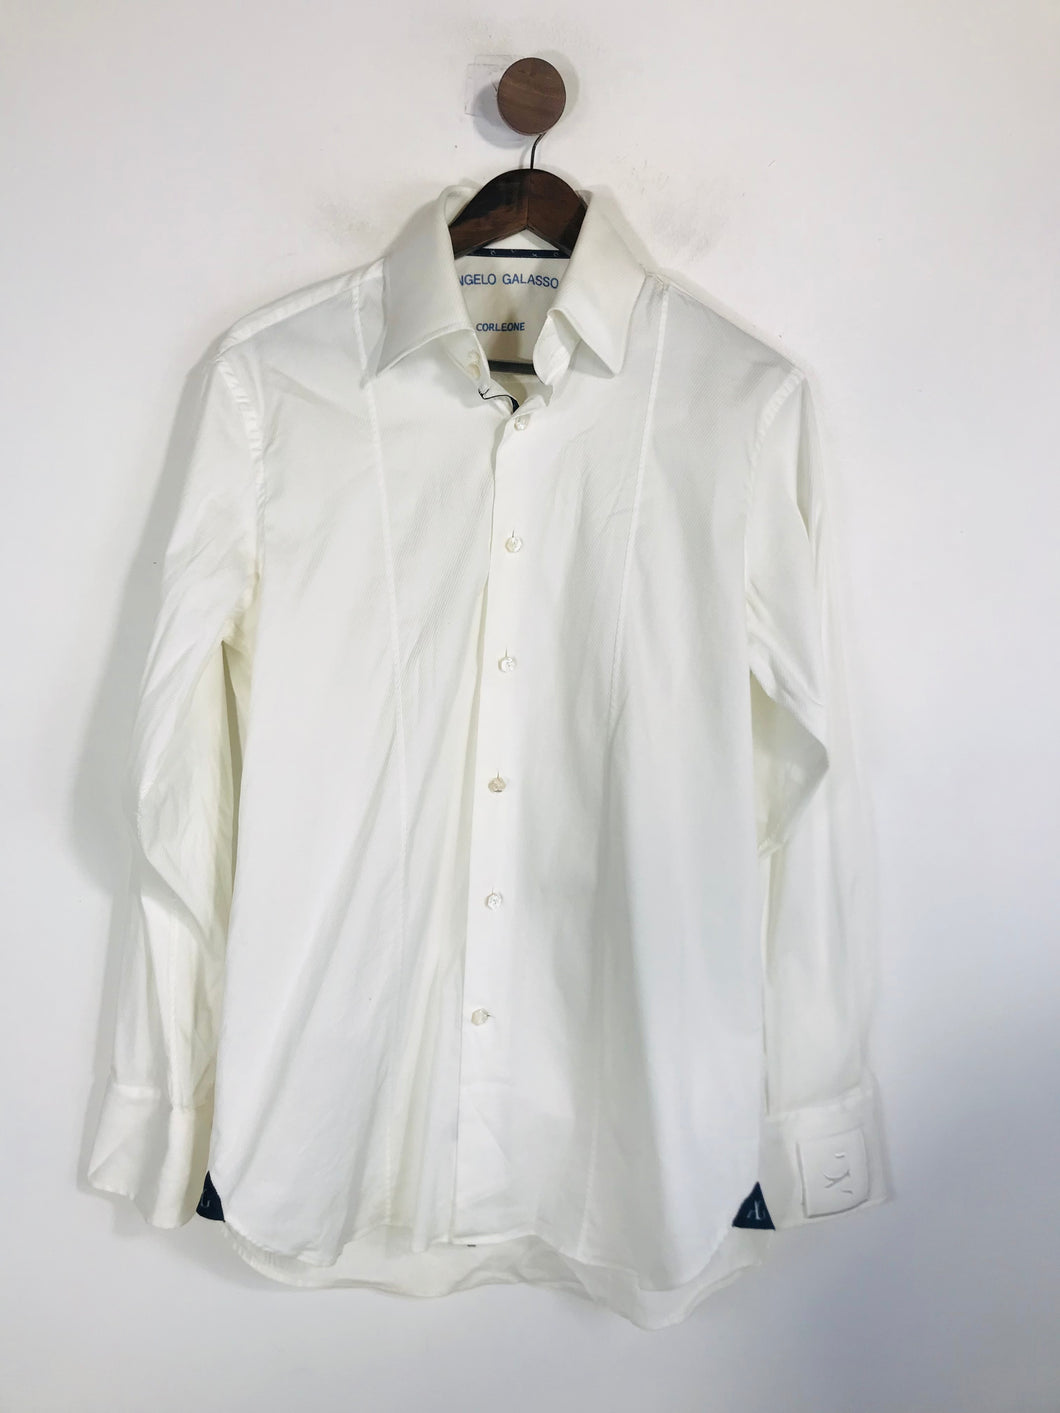 Angelo Galasso Men's Smart Button-Up Shirt | 41 16 | White